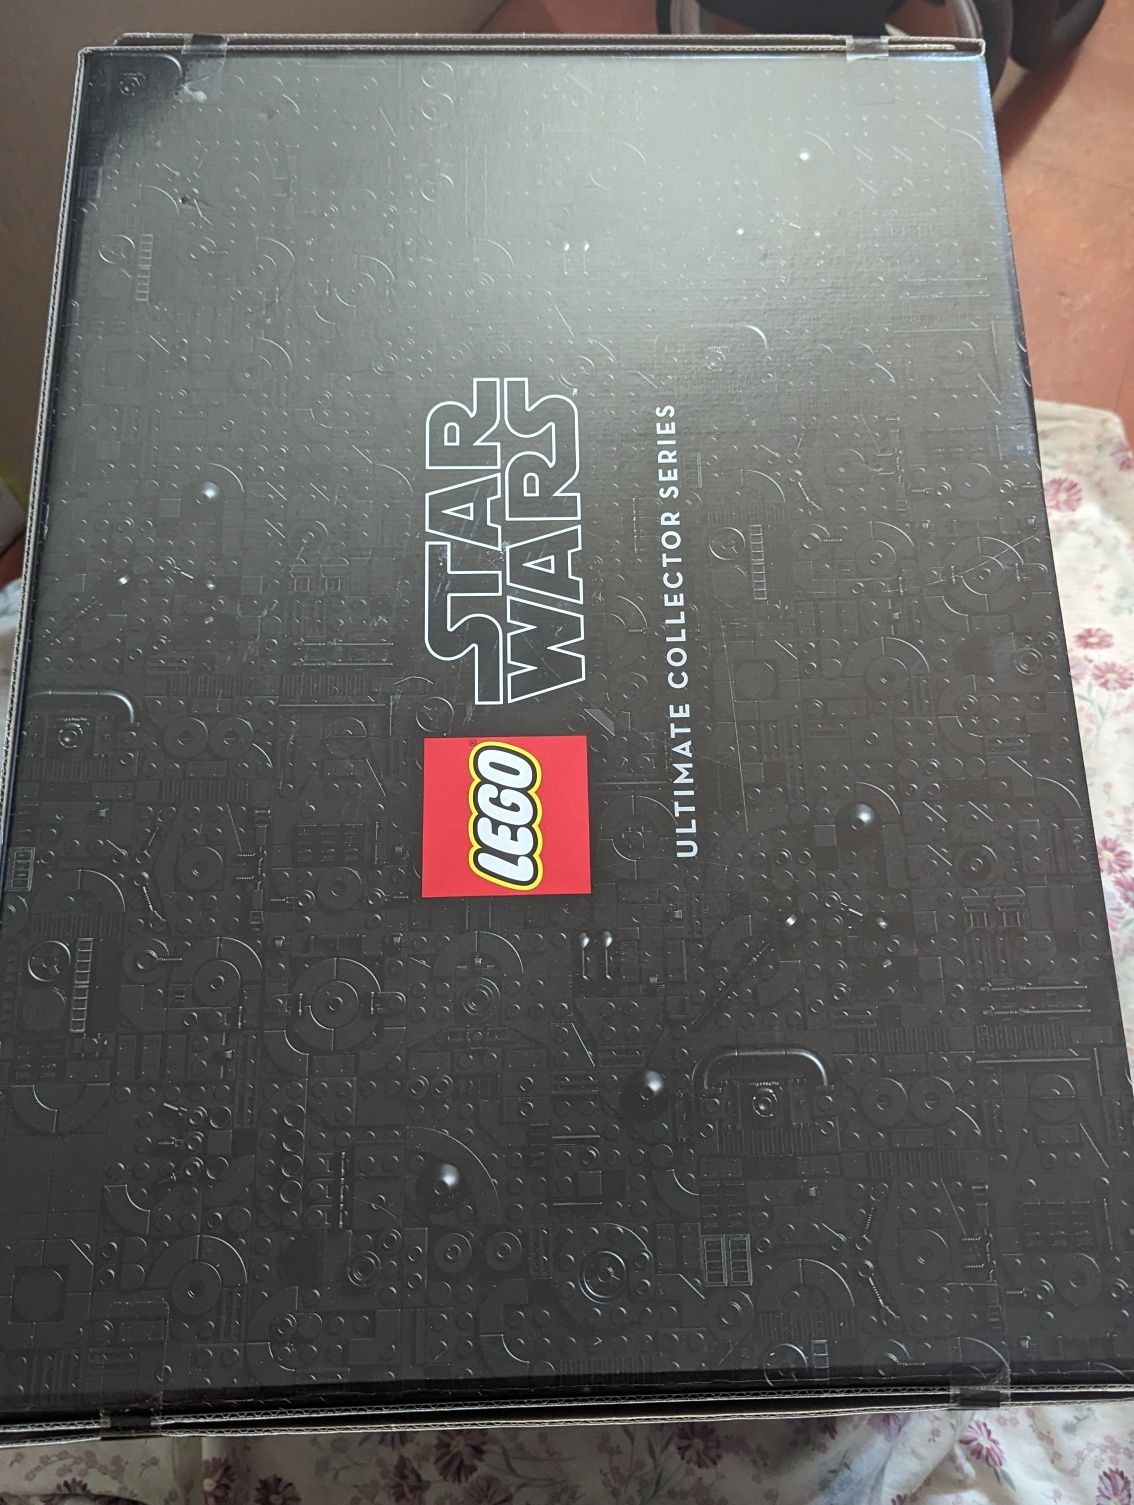 Lego 75252 Imperial Star Destroyer - ultimate Series - novo/selado